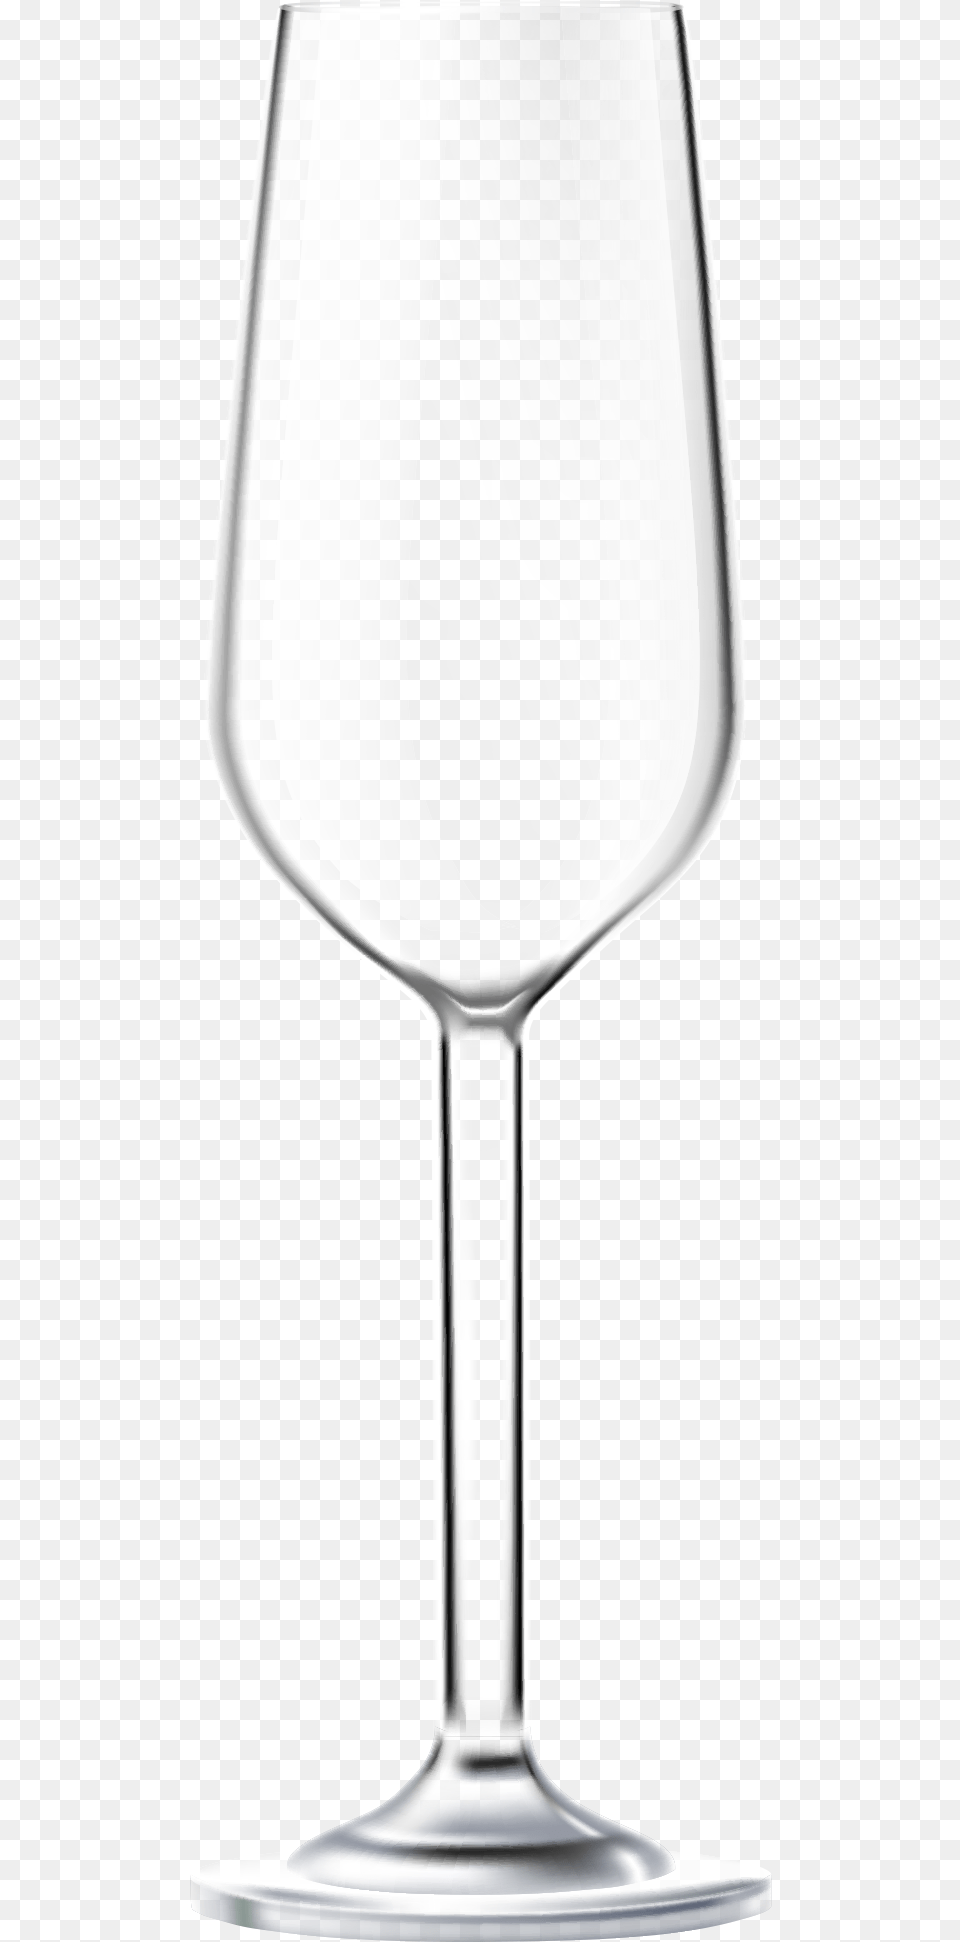 Transparent Wine Glass Image Searchpng, Alcohol, Beverage, Goblet, Liquor Png